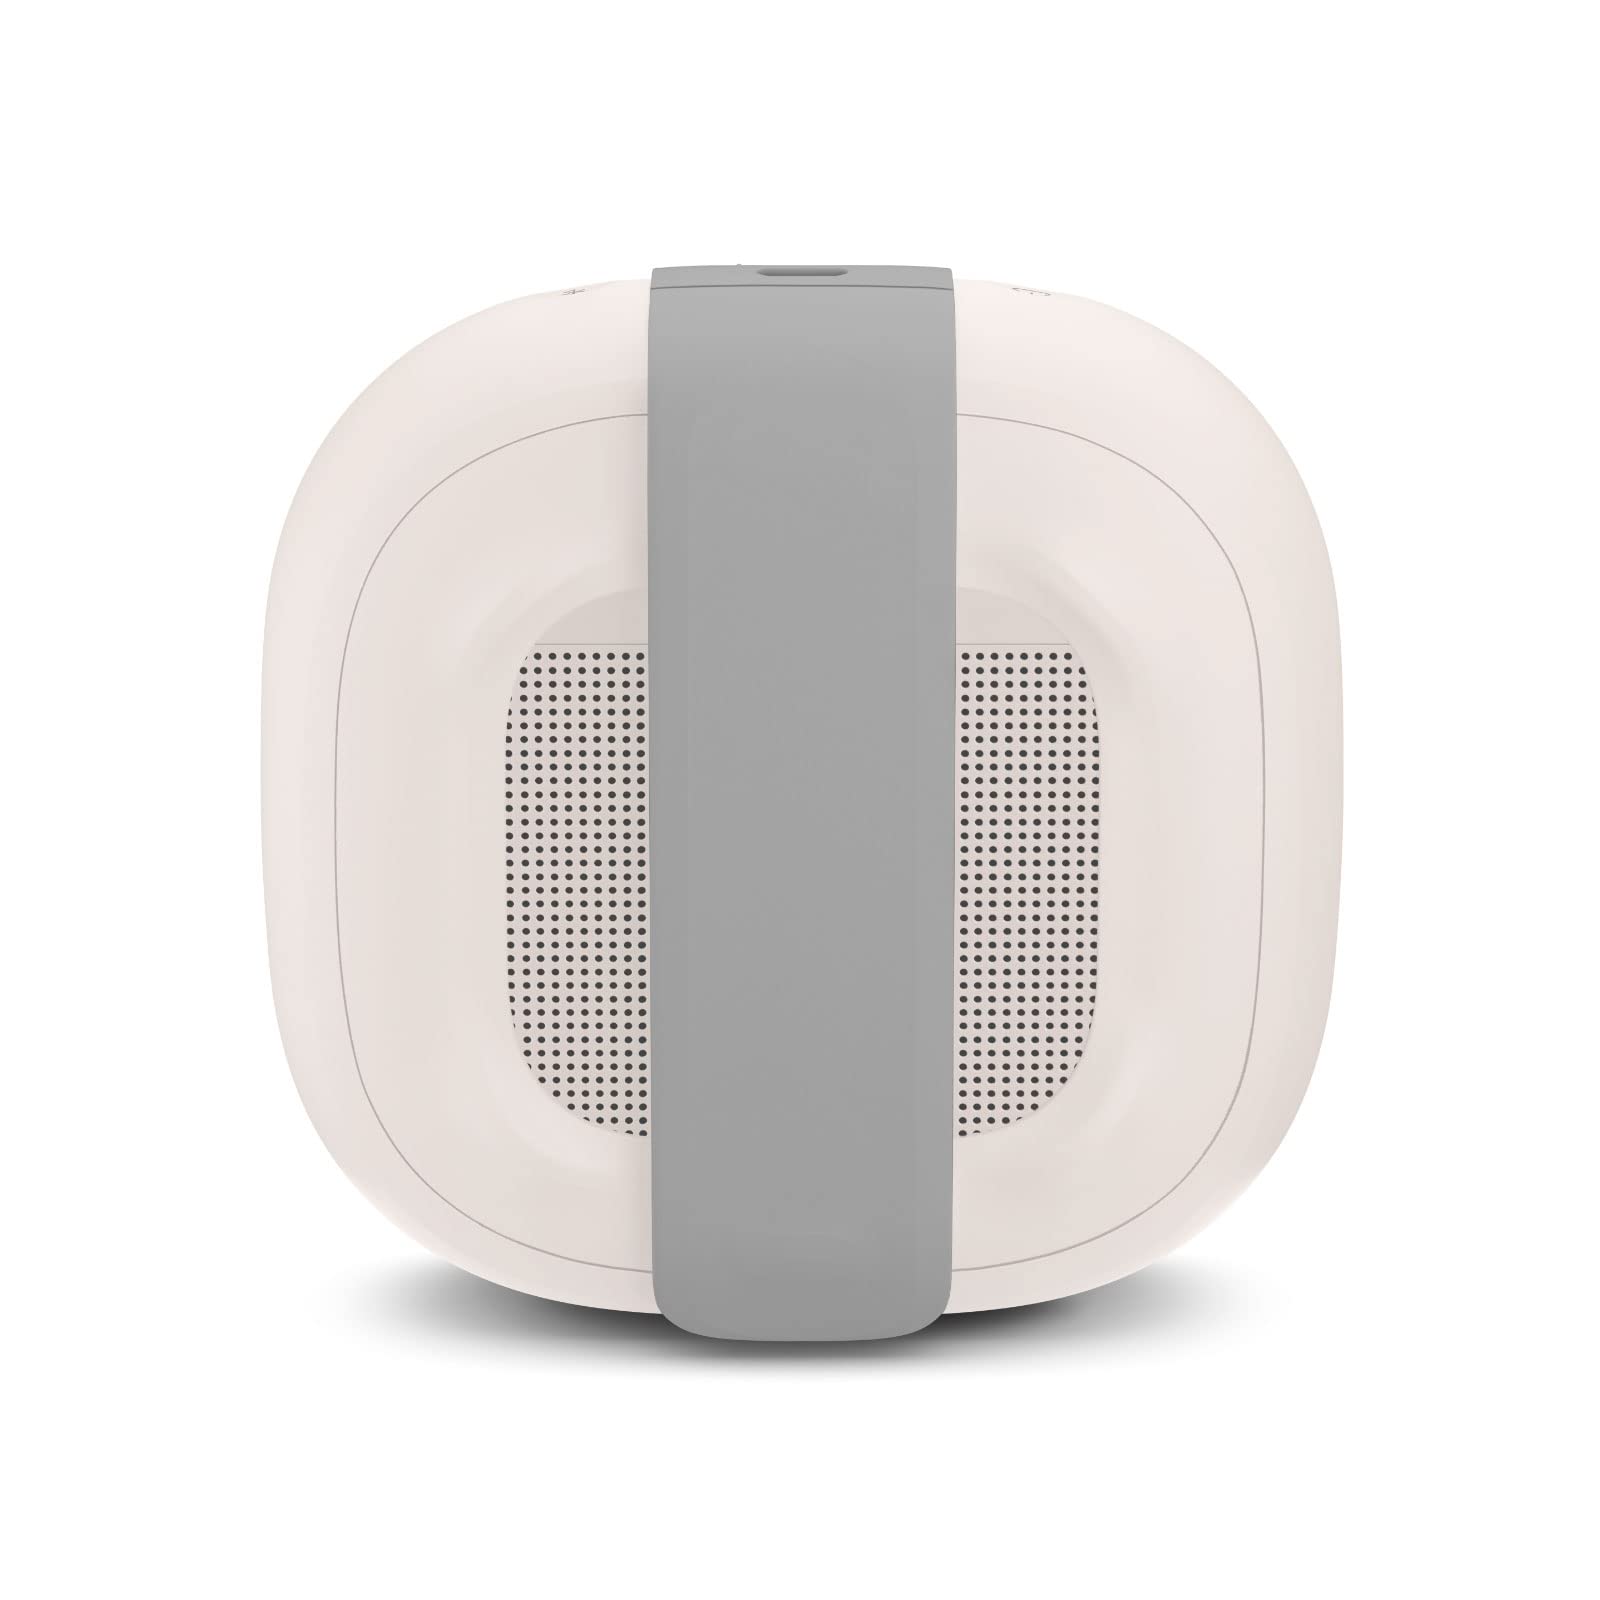 Bose SoundLink Micro Bluetooth Speaker: Small Portable Waterproof Speaker with Microphone, White Smoke